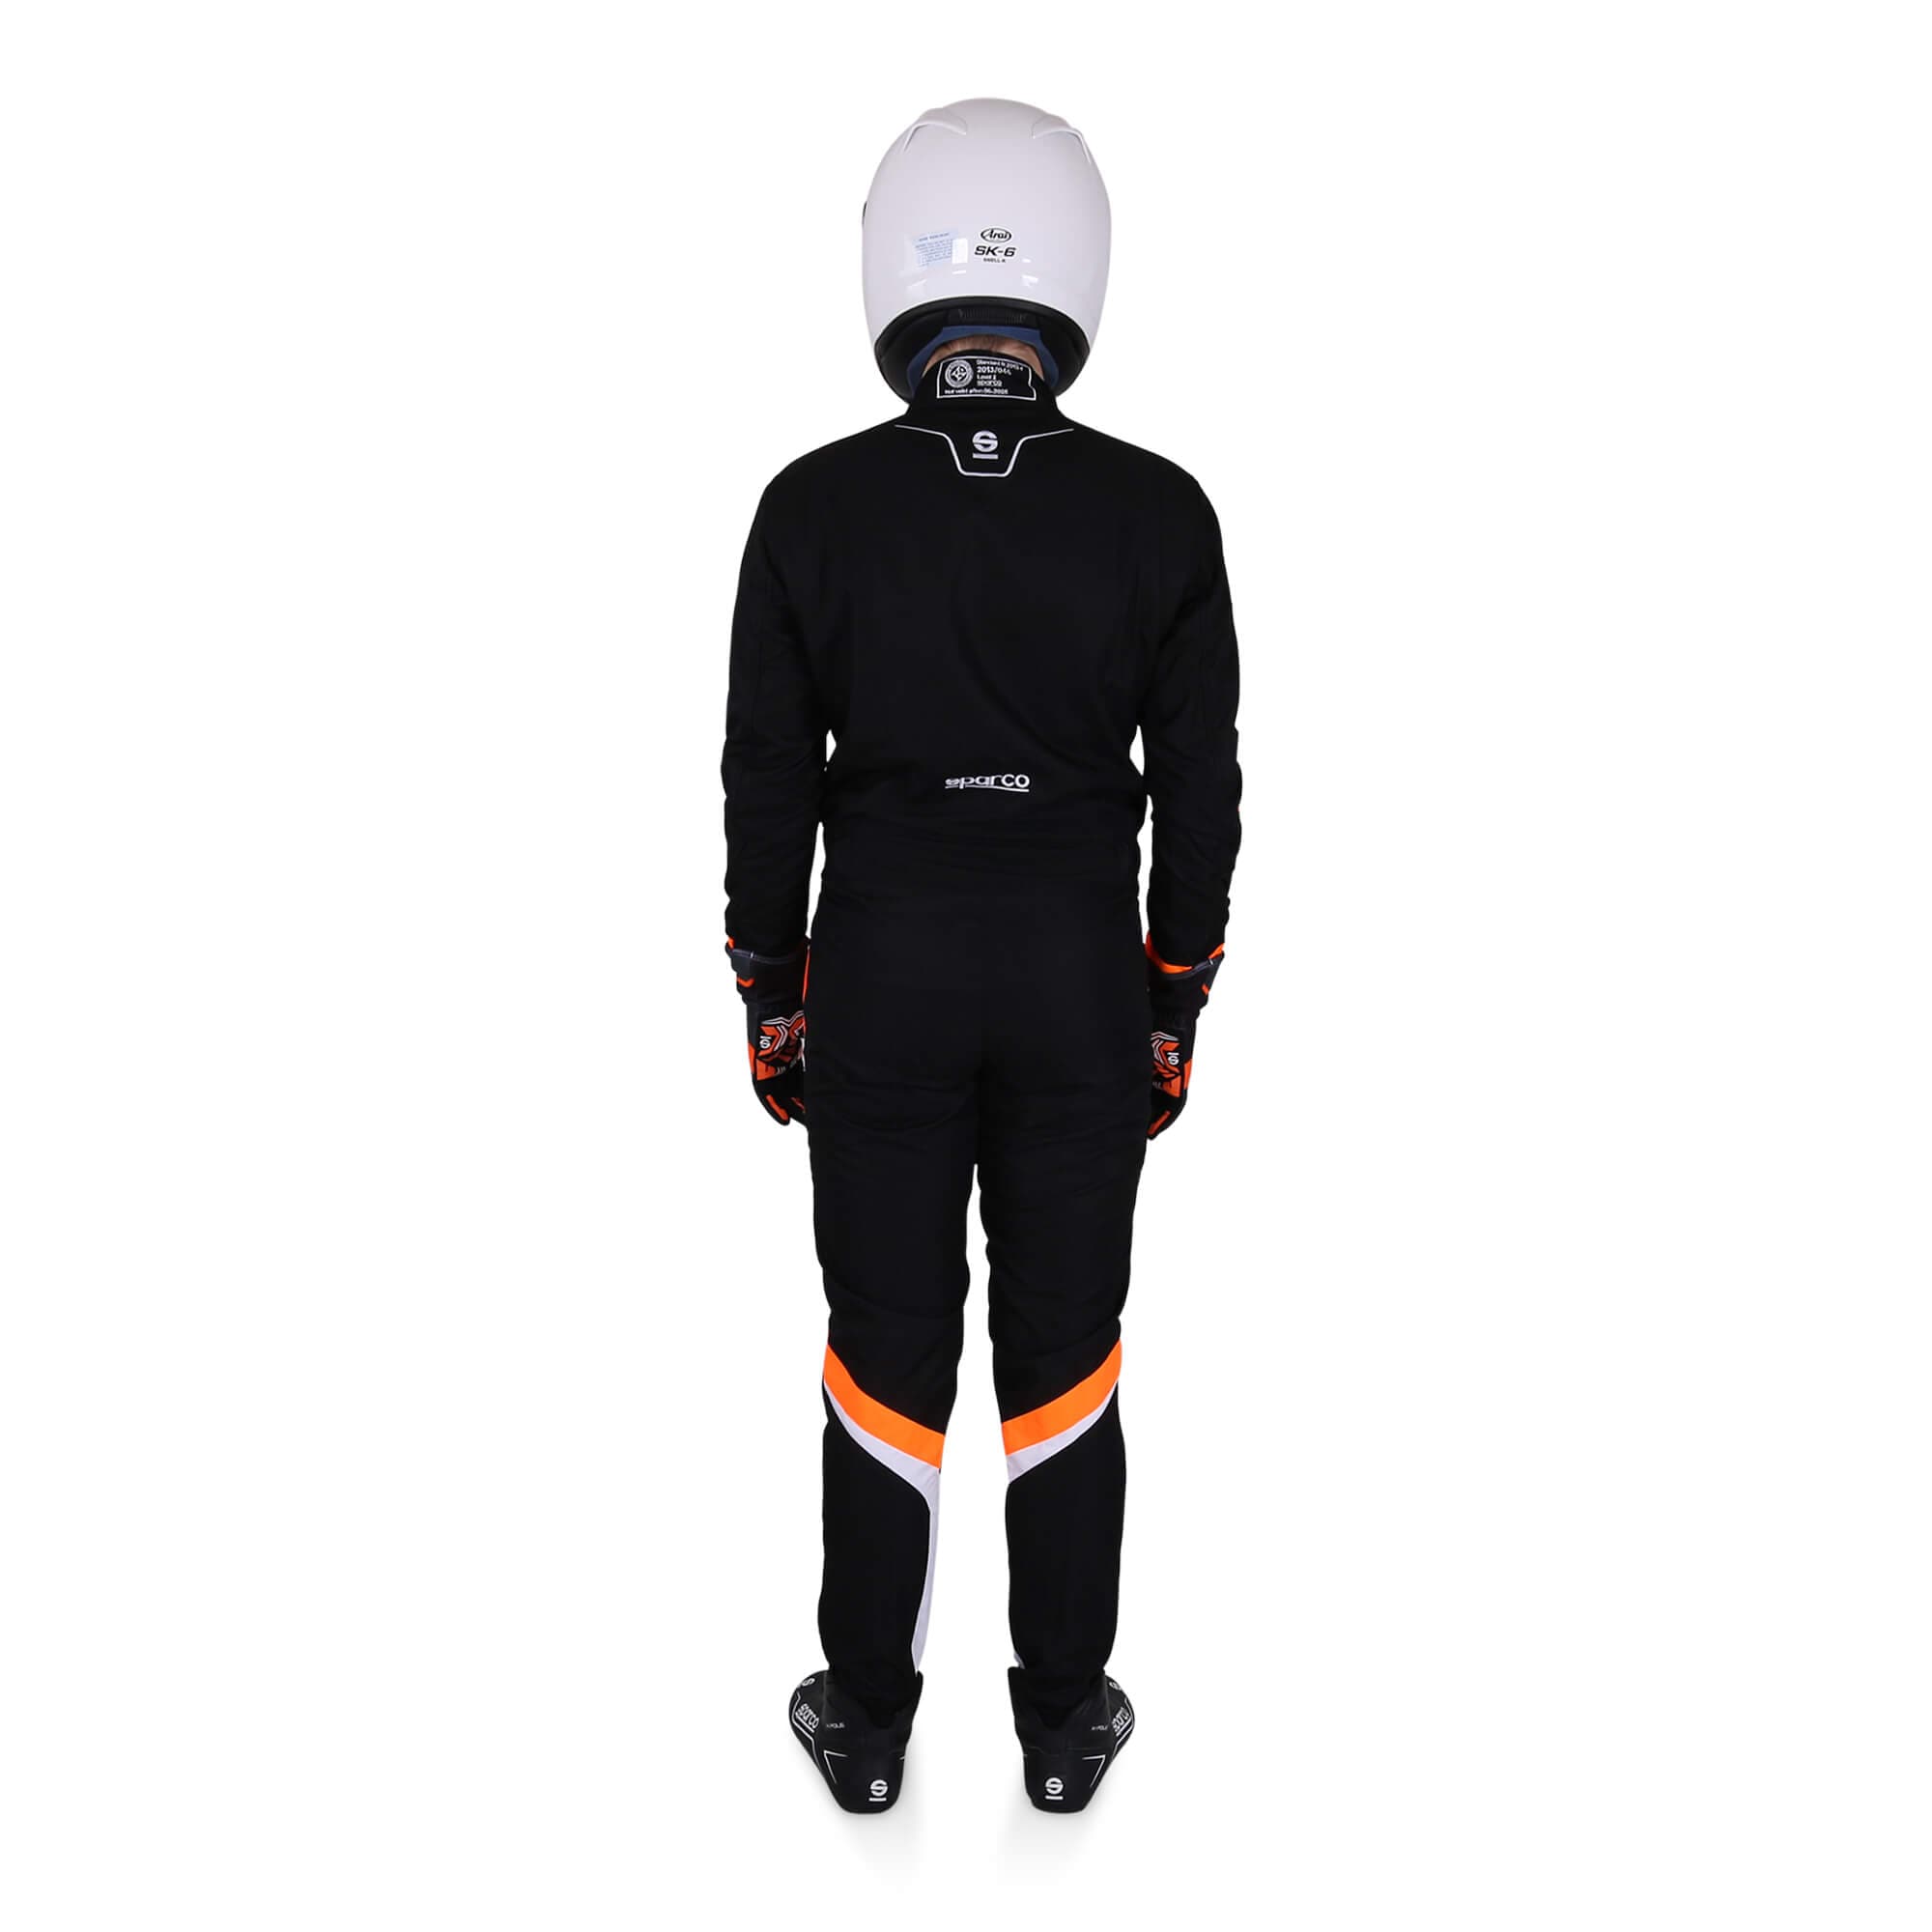 Karting Suit Sparco Thunder Black/Orange